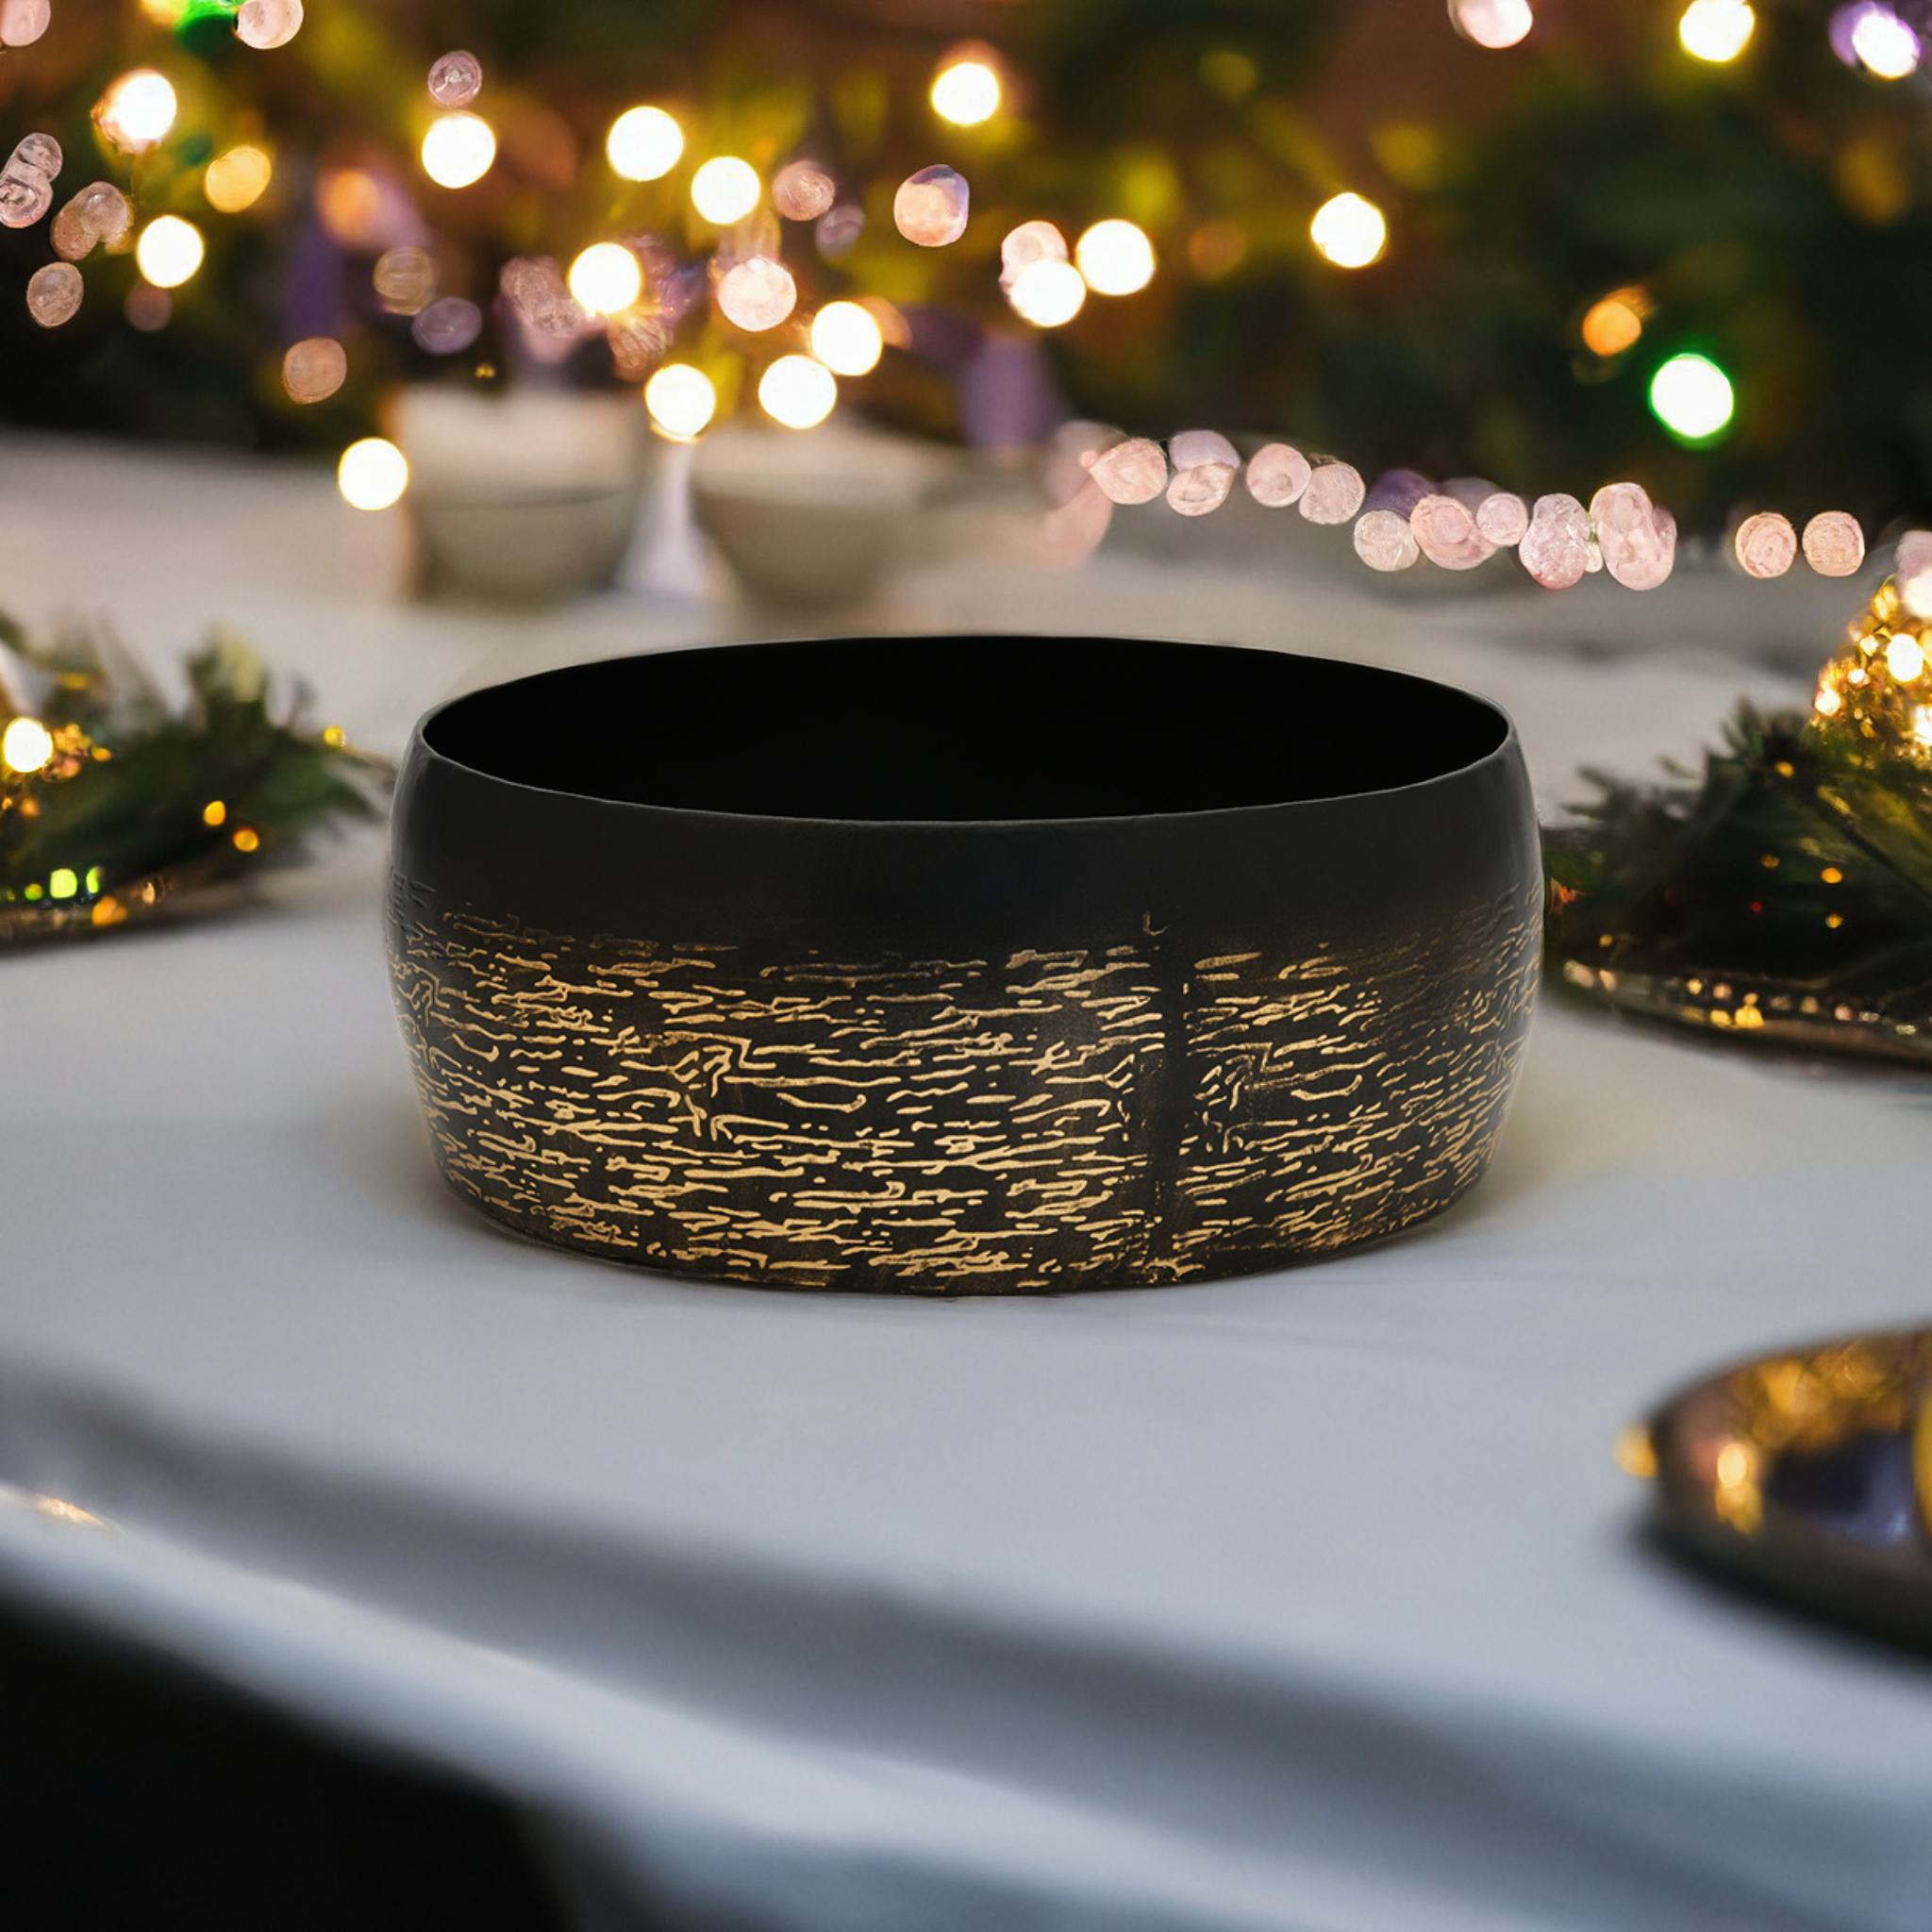 Decorative Metal Bricks Bowl (Gold & Black)